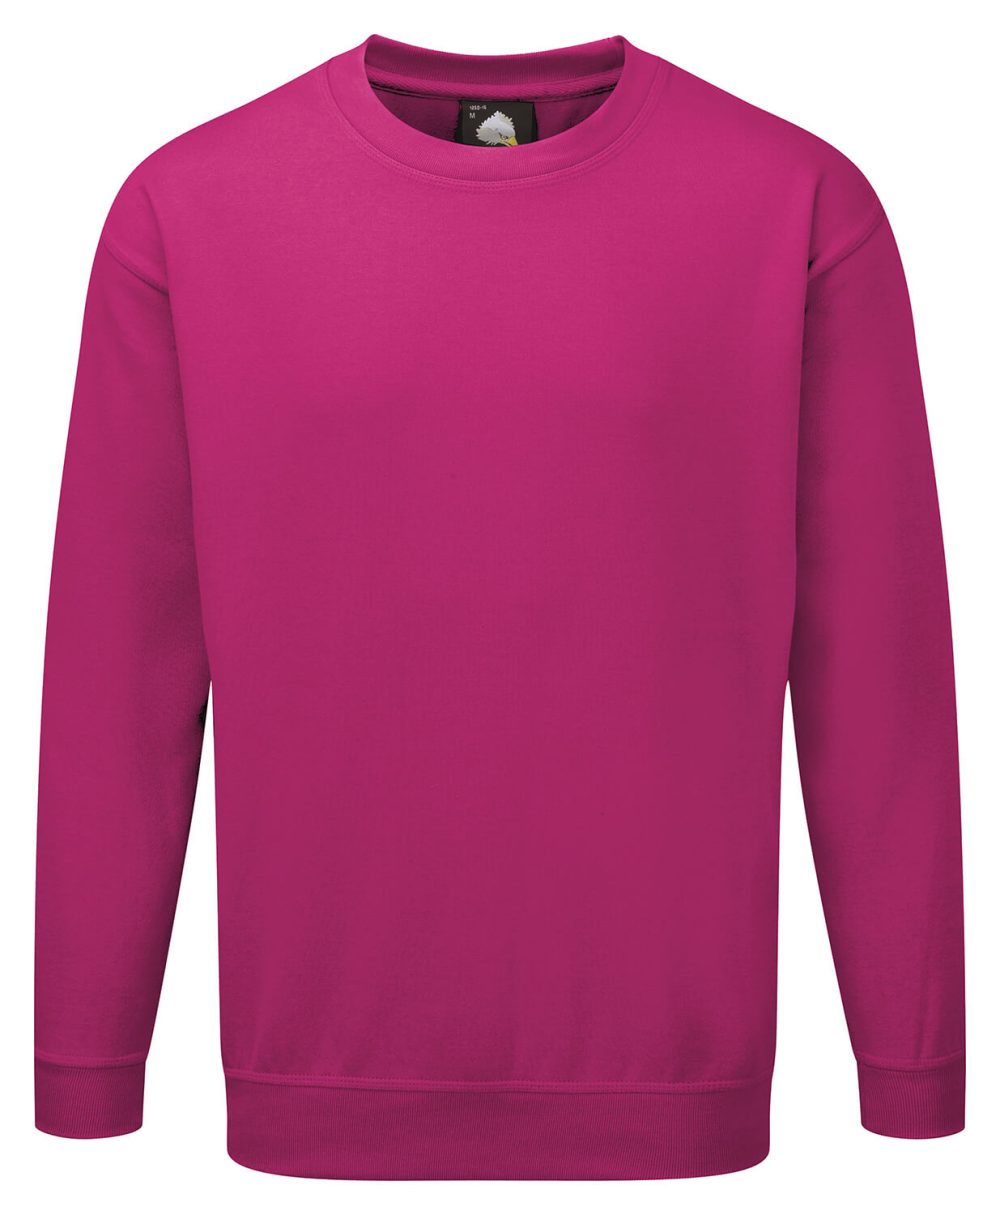 Kite Sweatshirt Pink